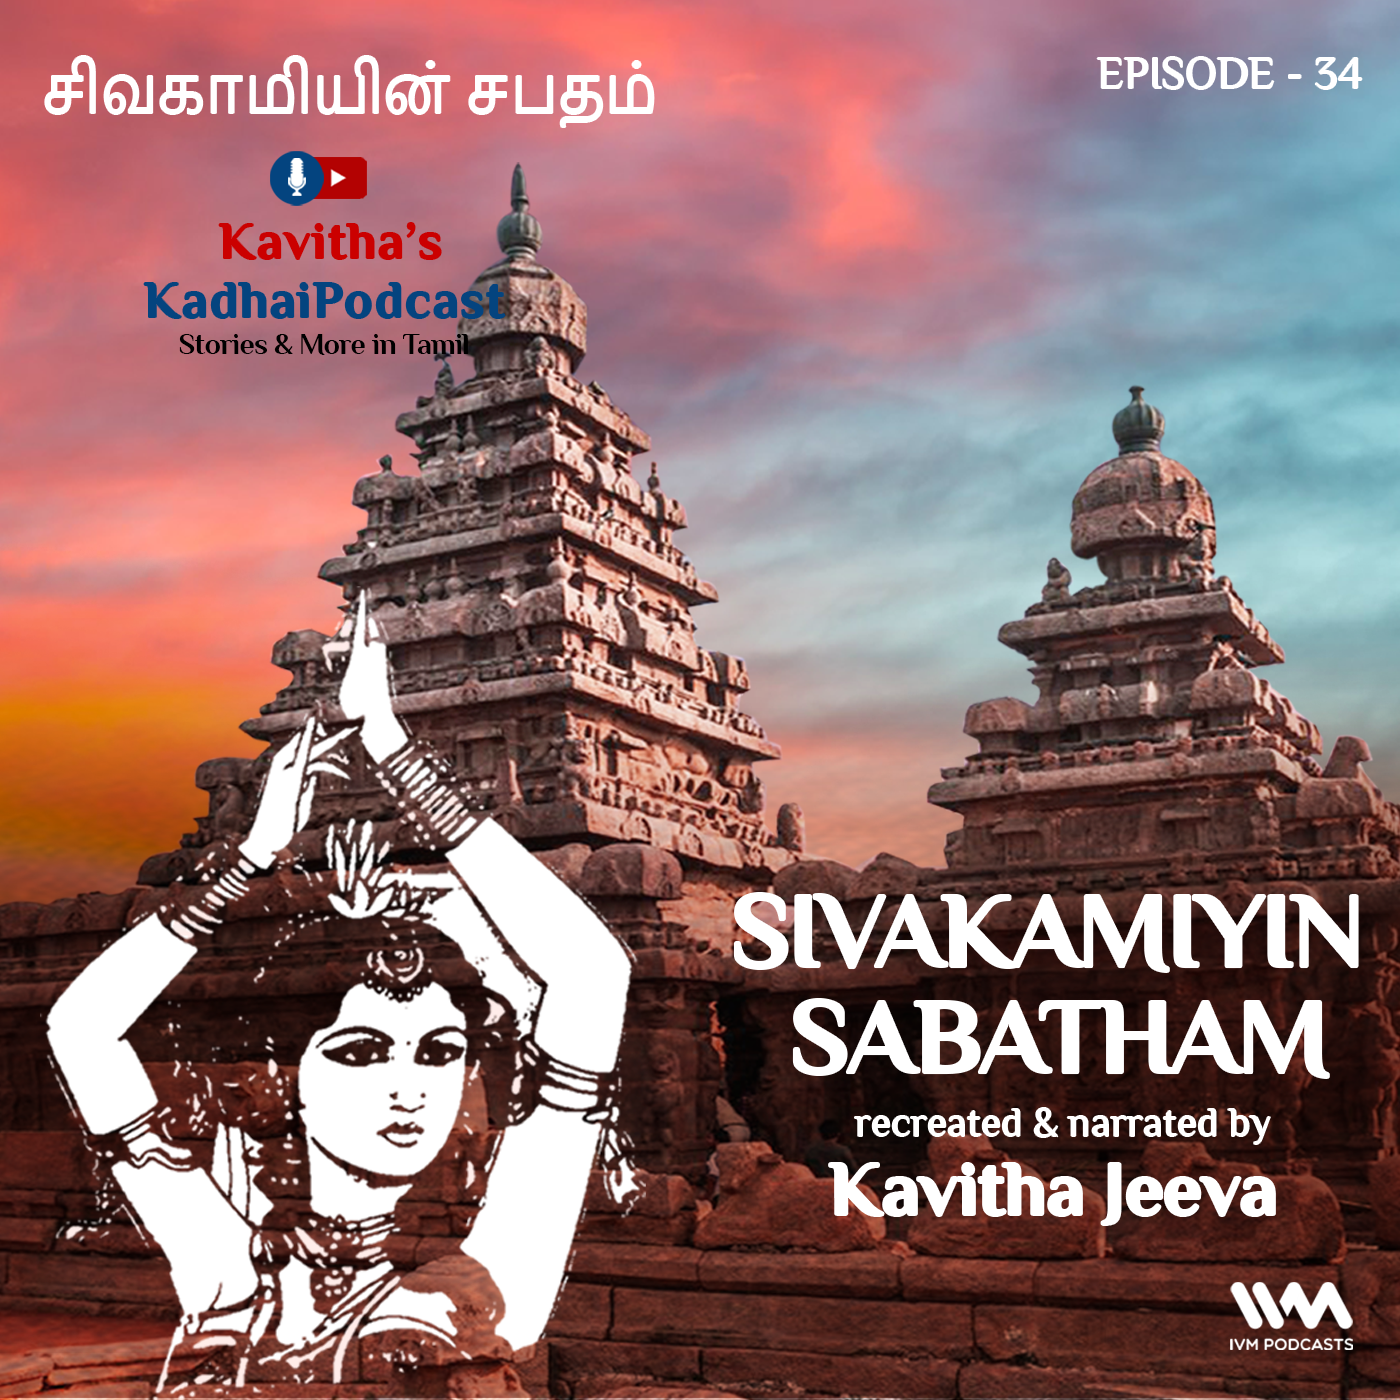 KadhaiPodcast’s Sivakamiyin Sabatham - Episode # 34